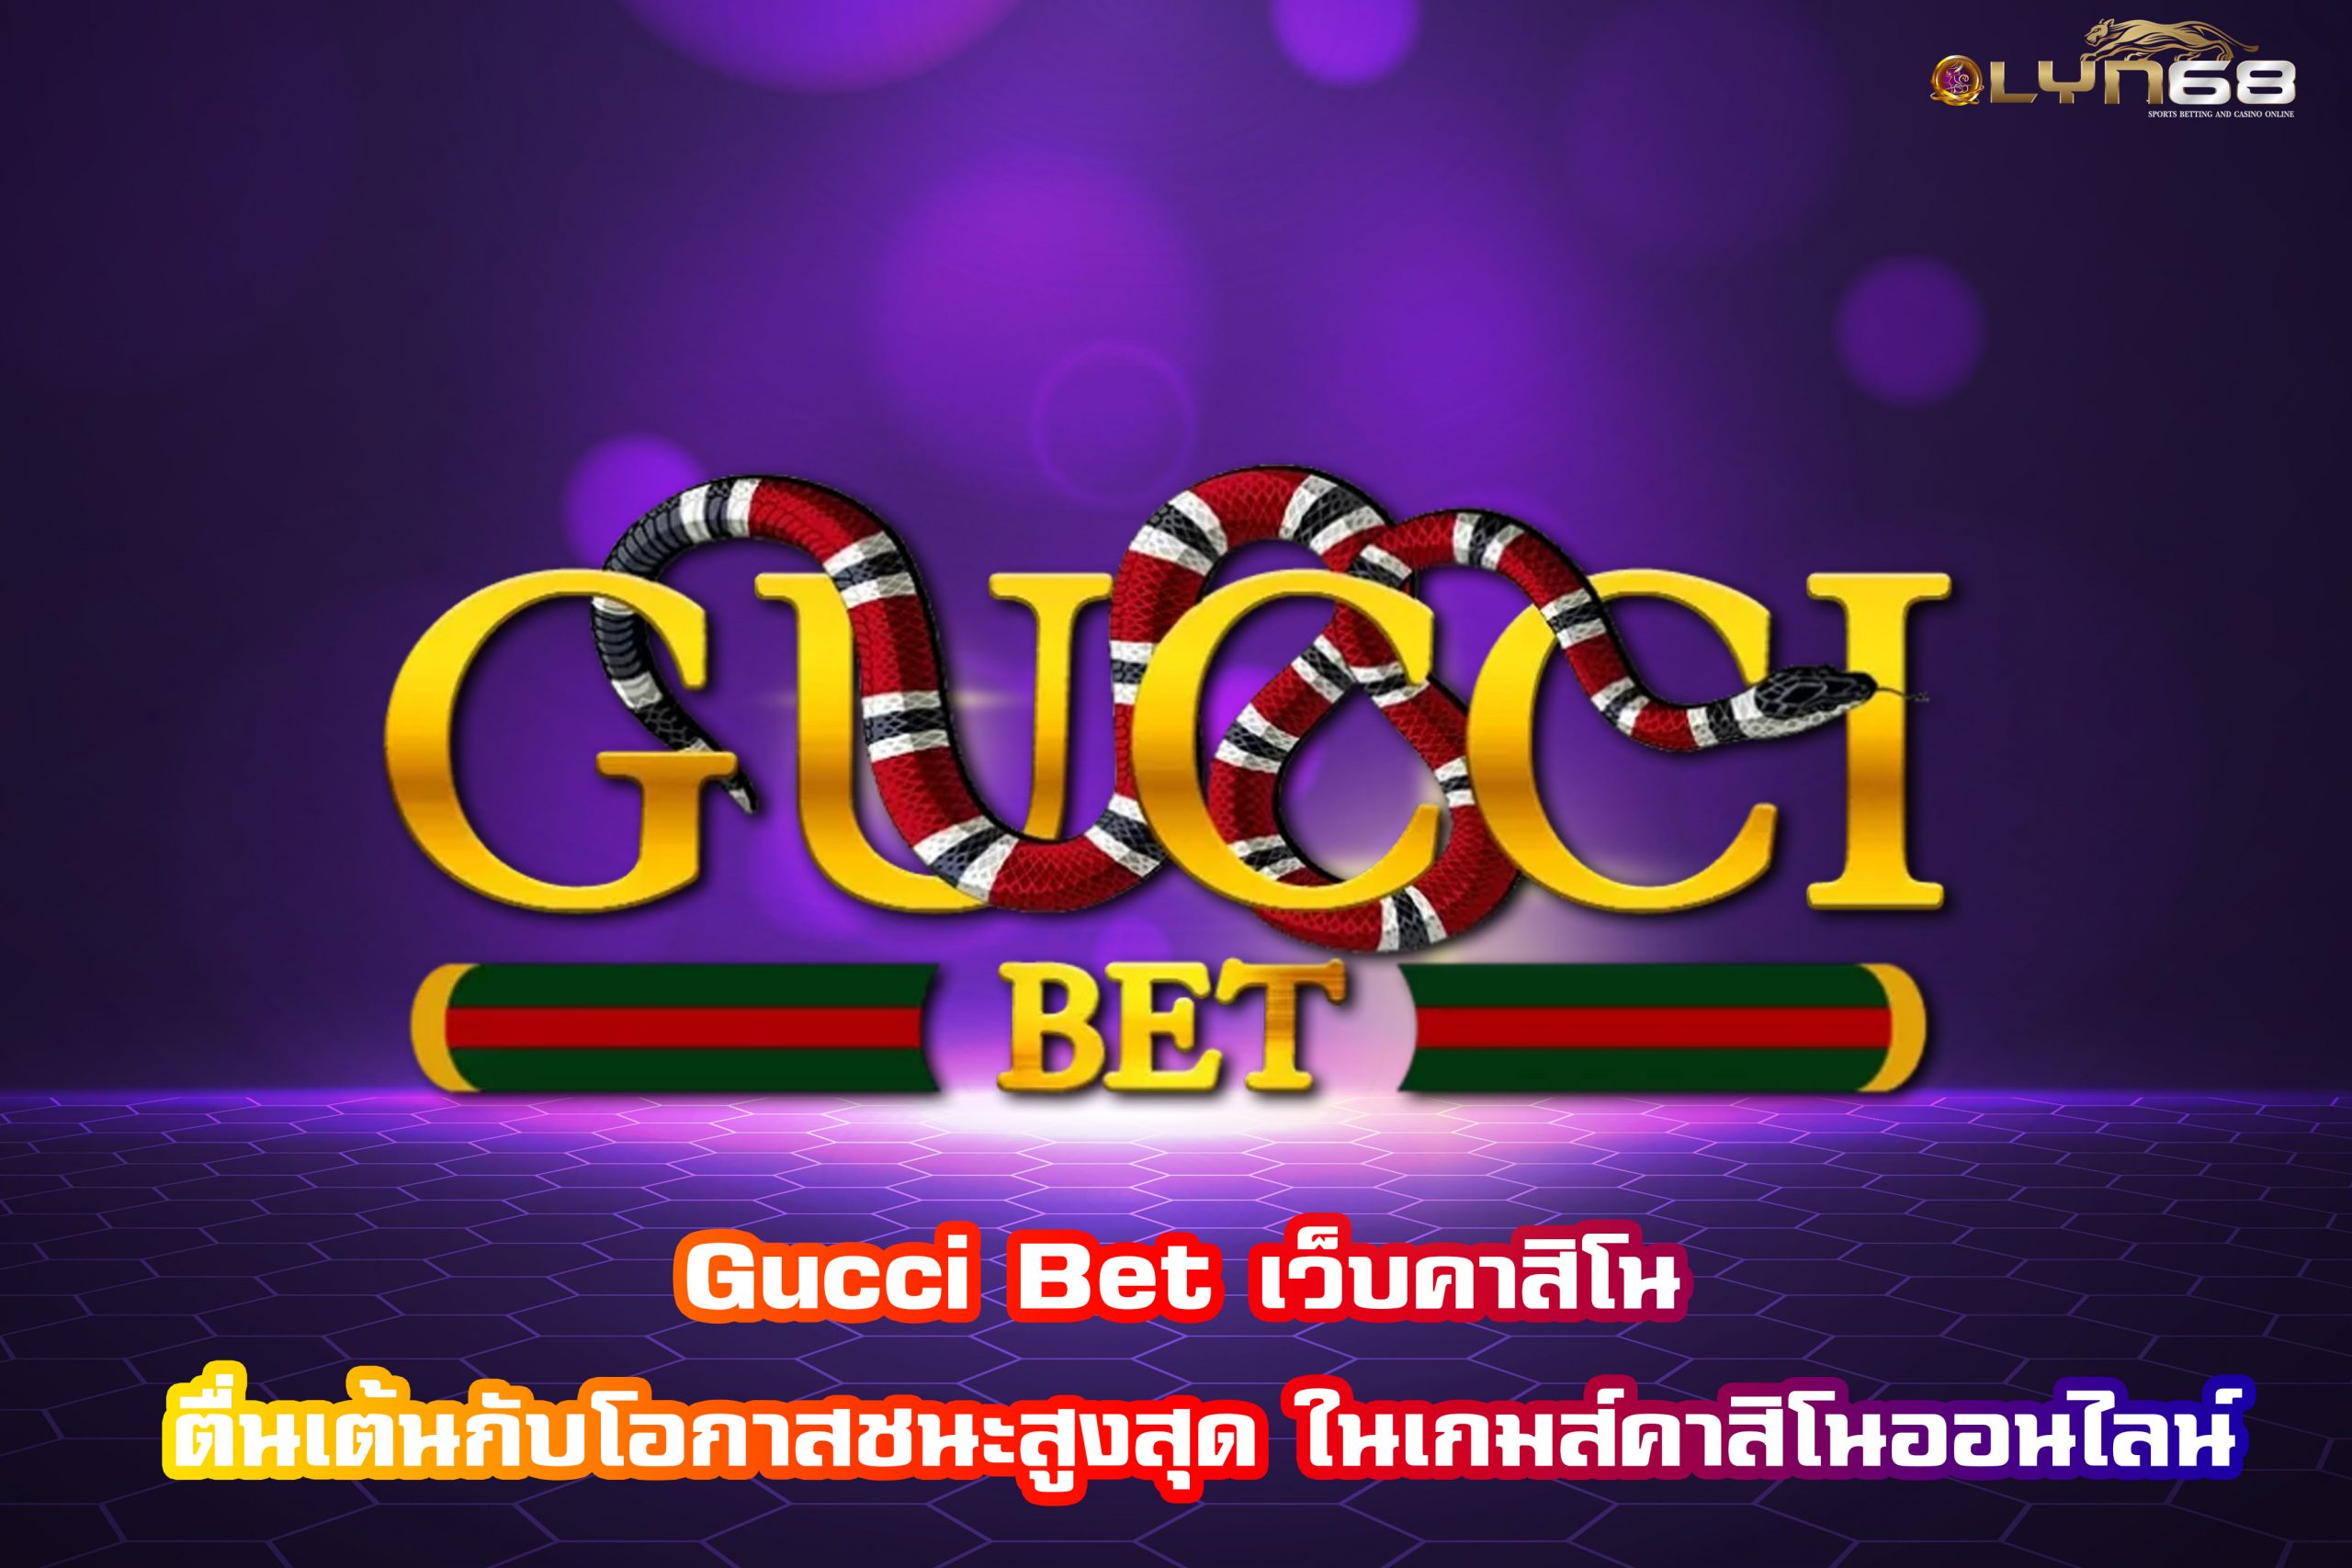 Gucci Bet เว็บคาสิโน ตื่นเต้นกับโอกาสชนะสูงสุด ในเกมส์คาสิโนออนไลน์